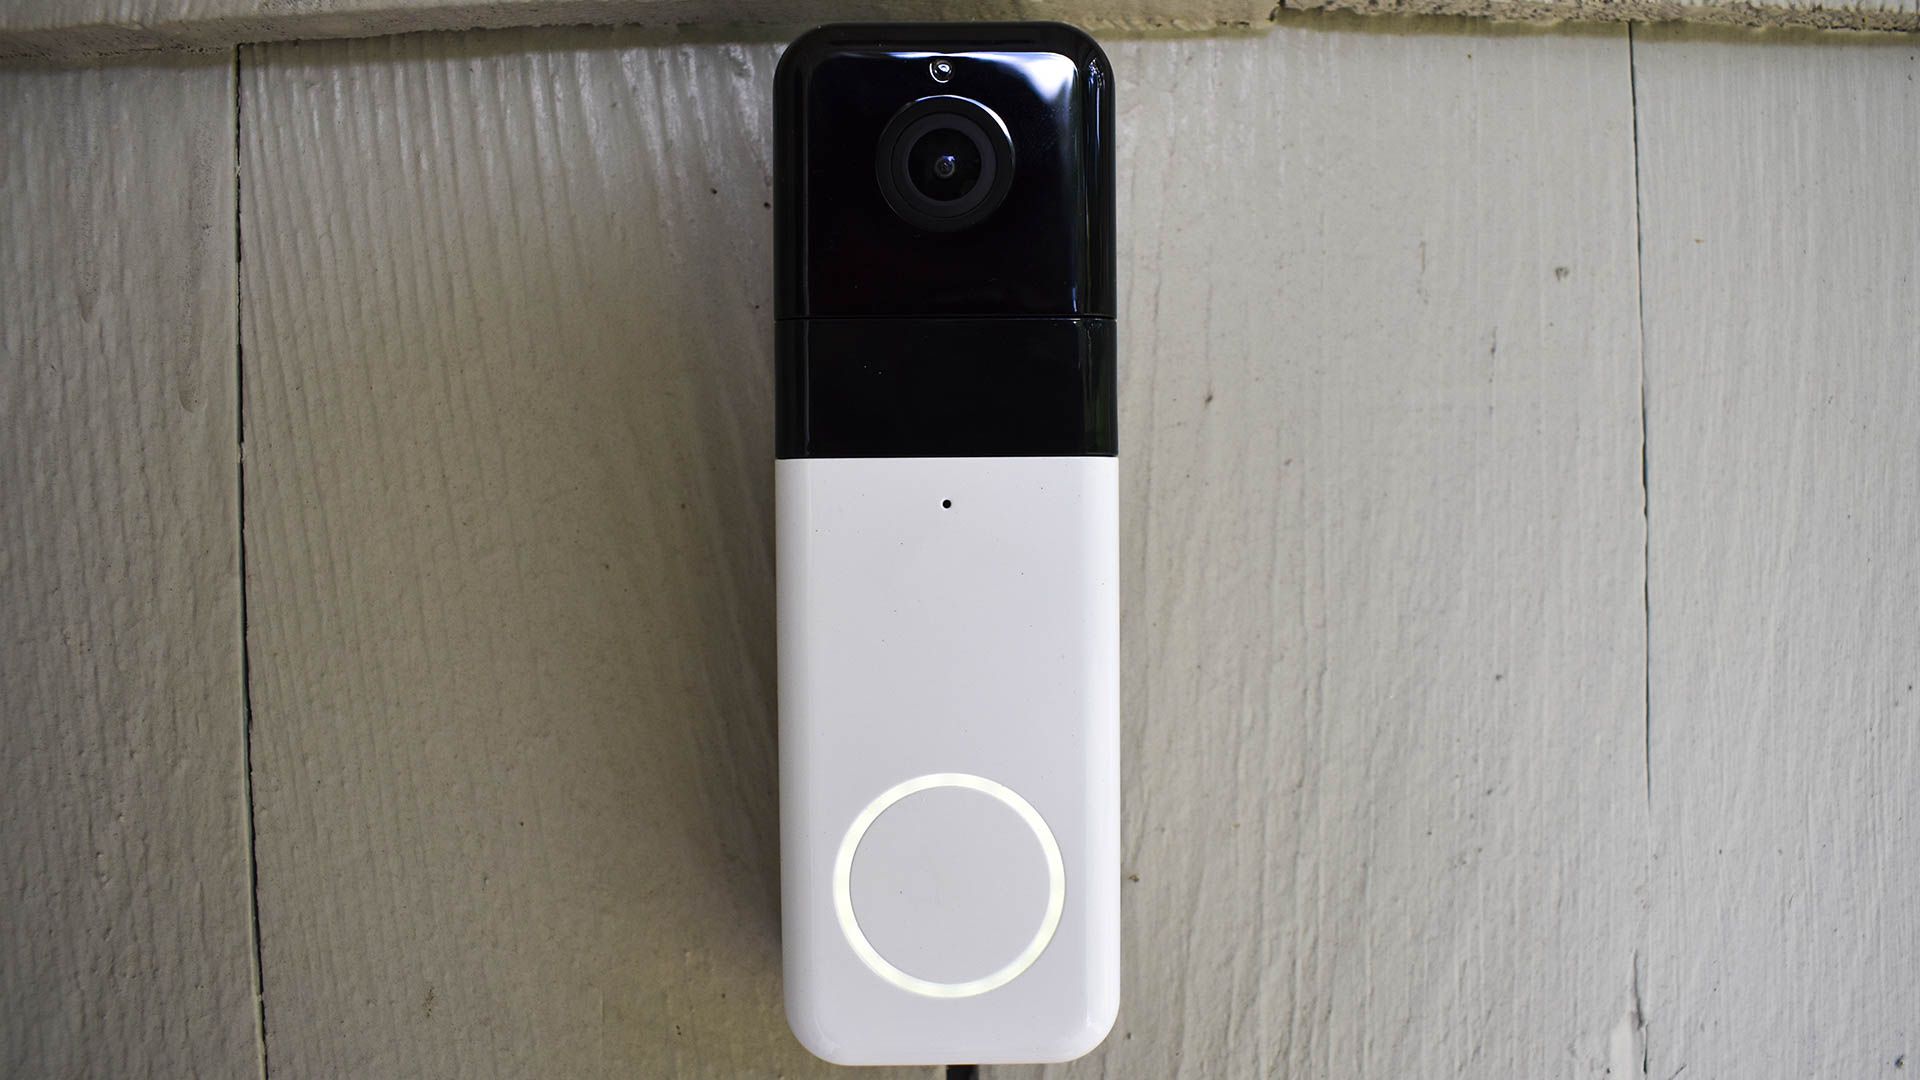 Wyze Video Doorbell Pro flashing a white light